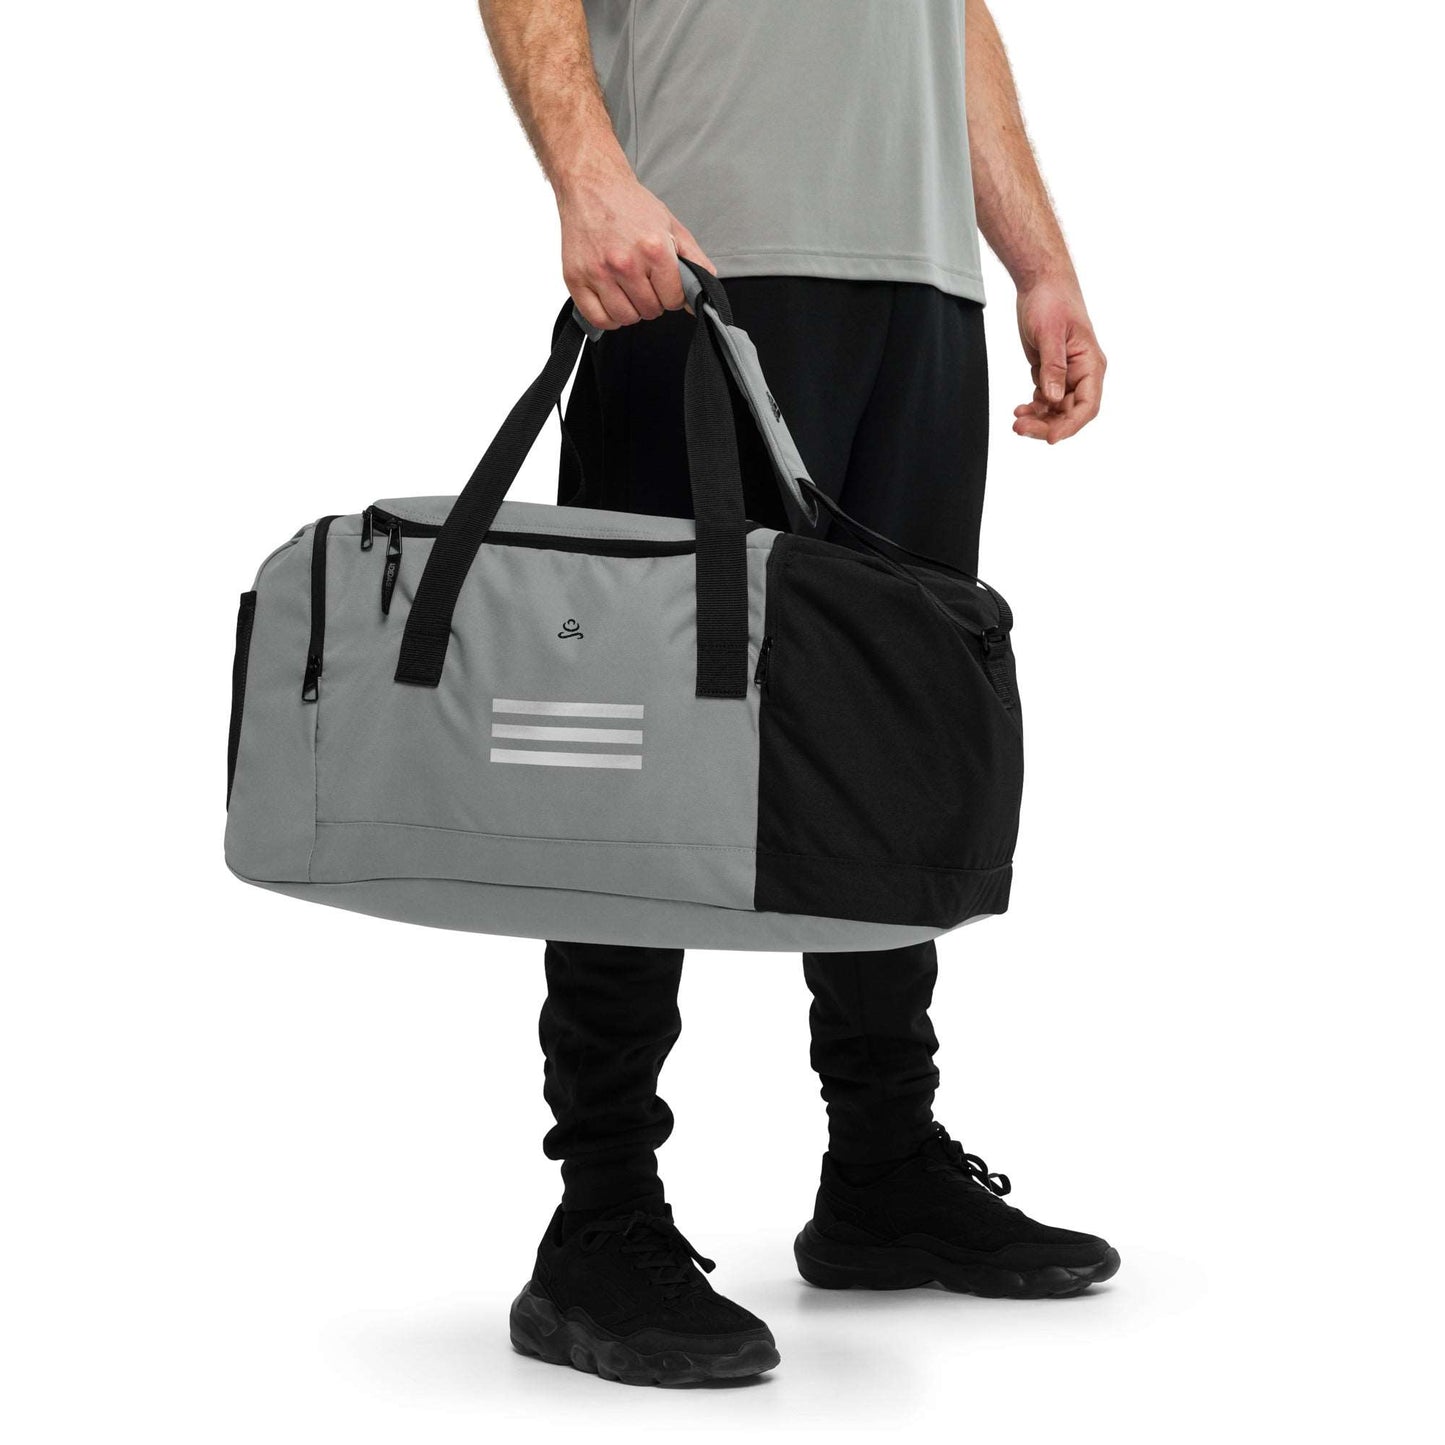  Limited Edition Jain/adidas duffle bag by Jain Yoga sold by Jain Yoga